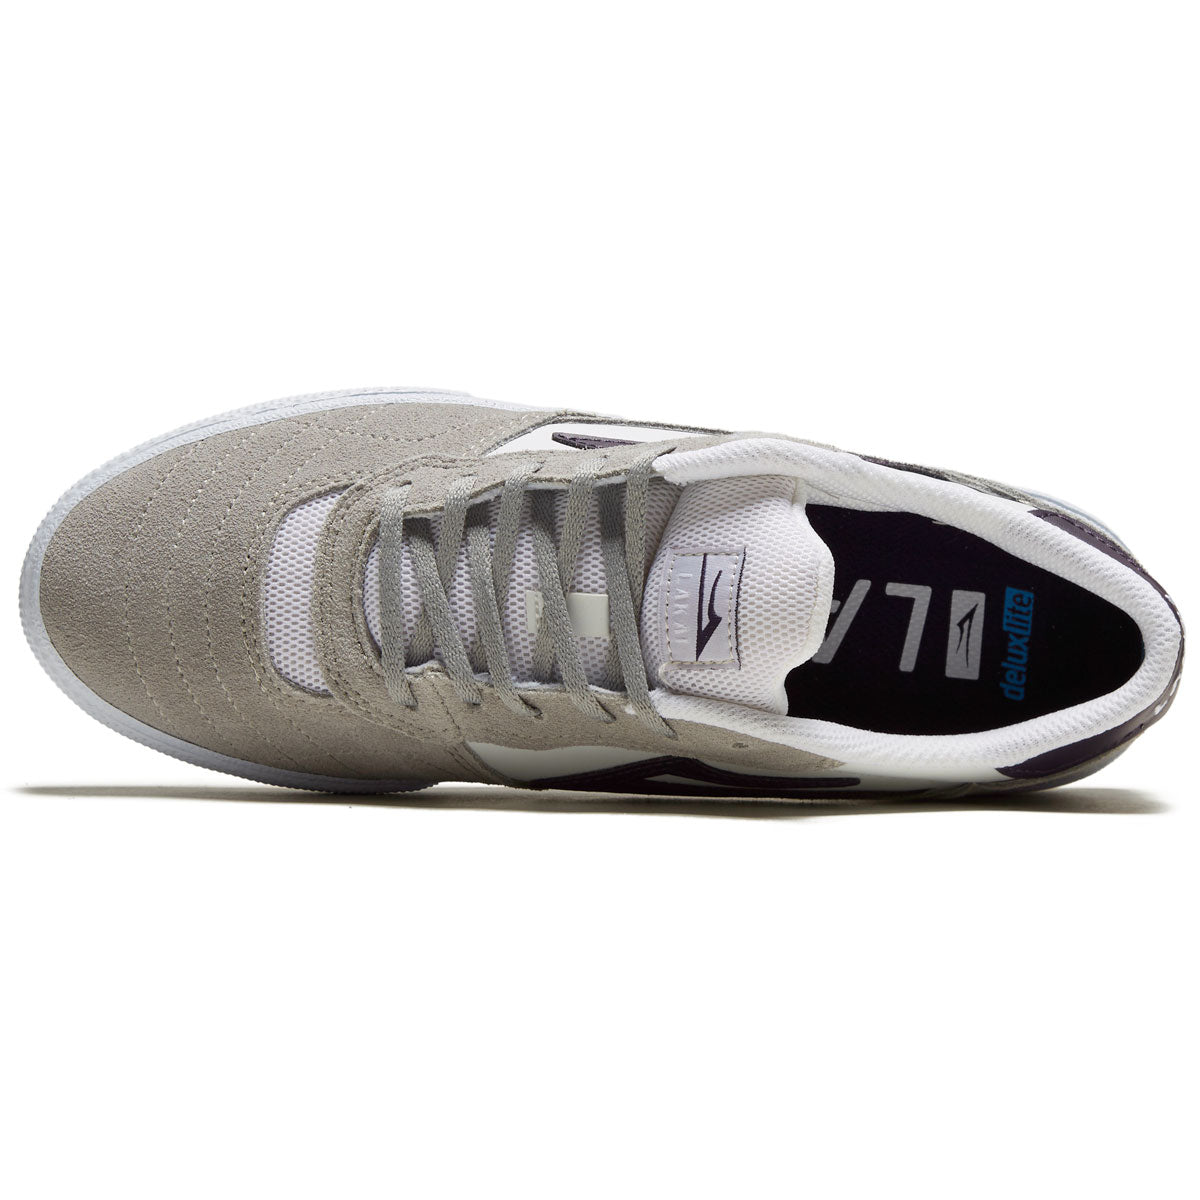 Lakai Cambridge Shoes - Grey/White Suede image 3